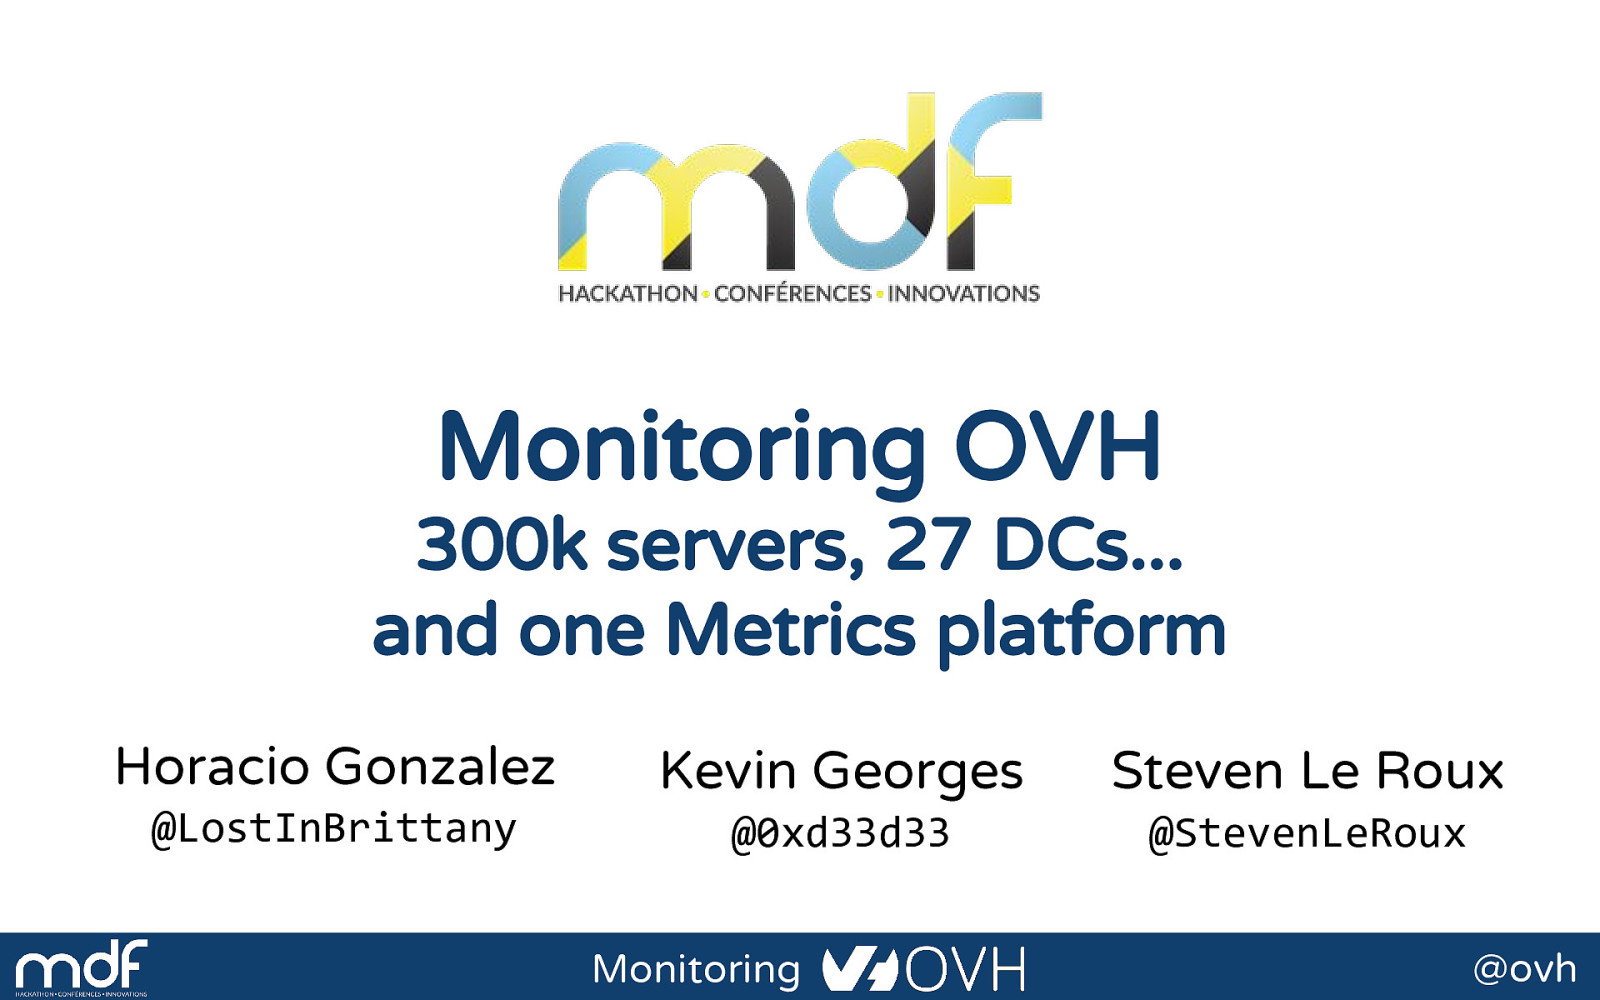 Monitoring OVH: 300k servers, 27 DCs and one Metrics platform